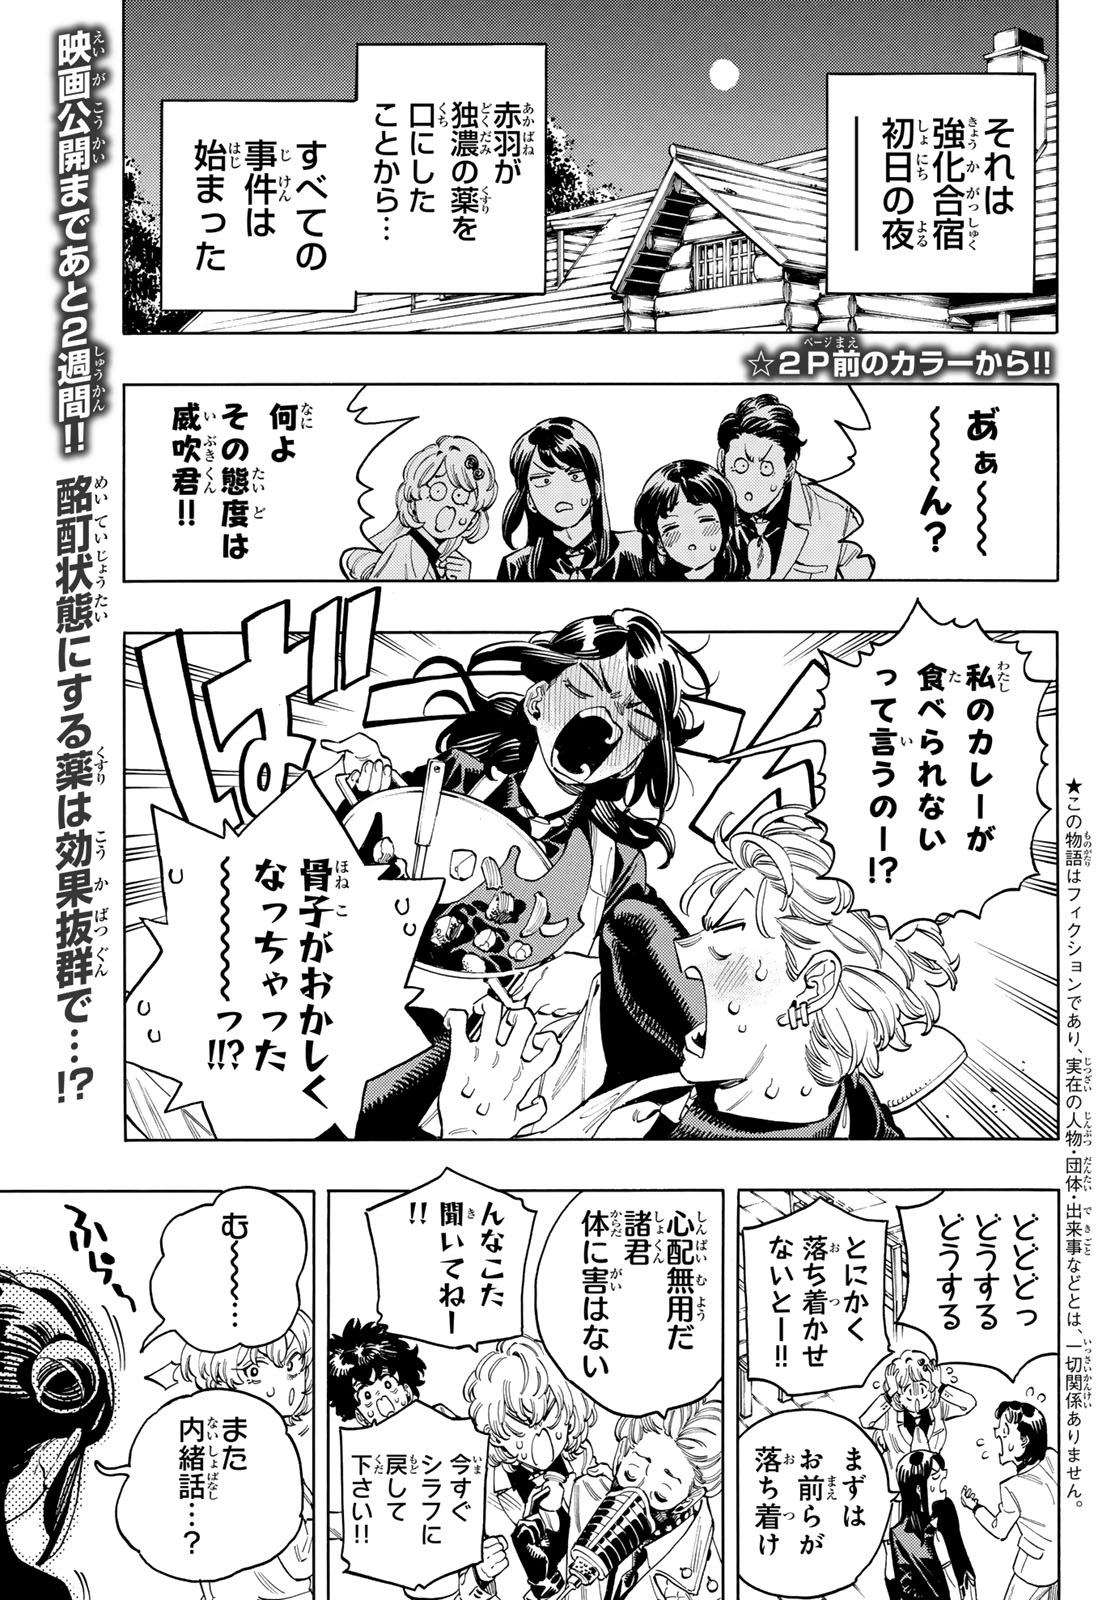 Akabane Honeko no Bodyguard - Chapter 87 - Page 2